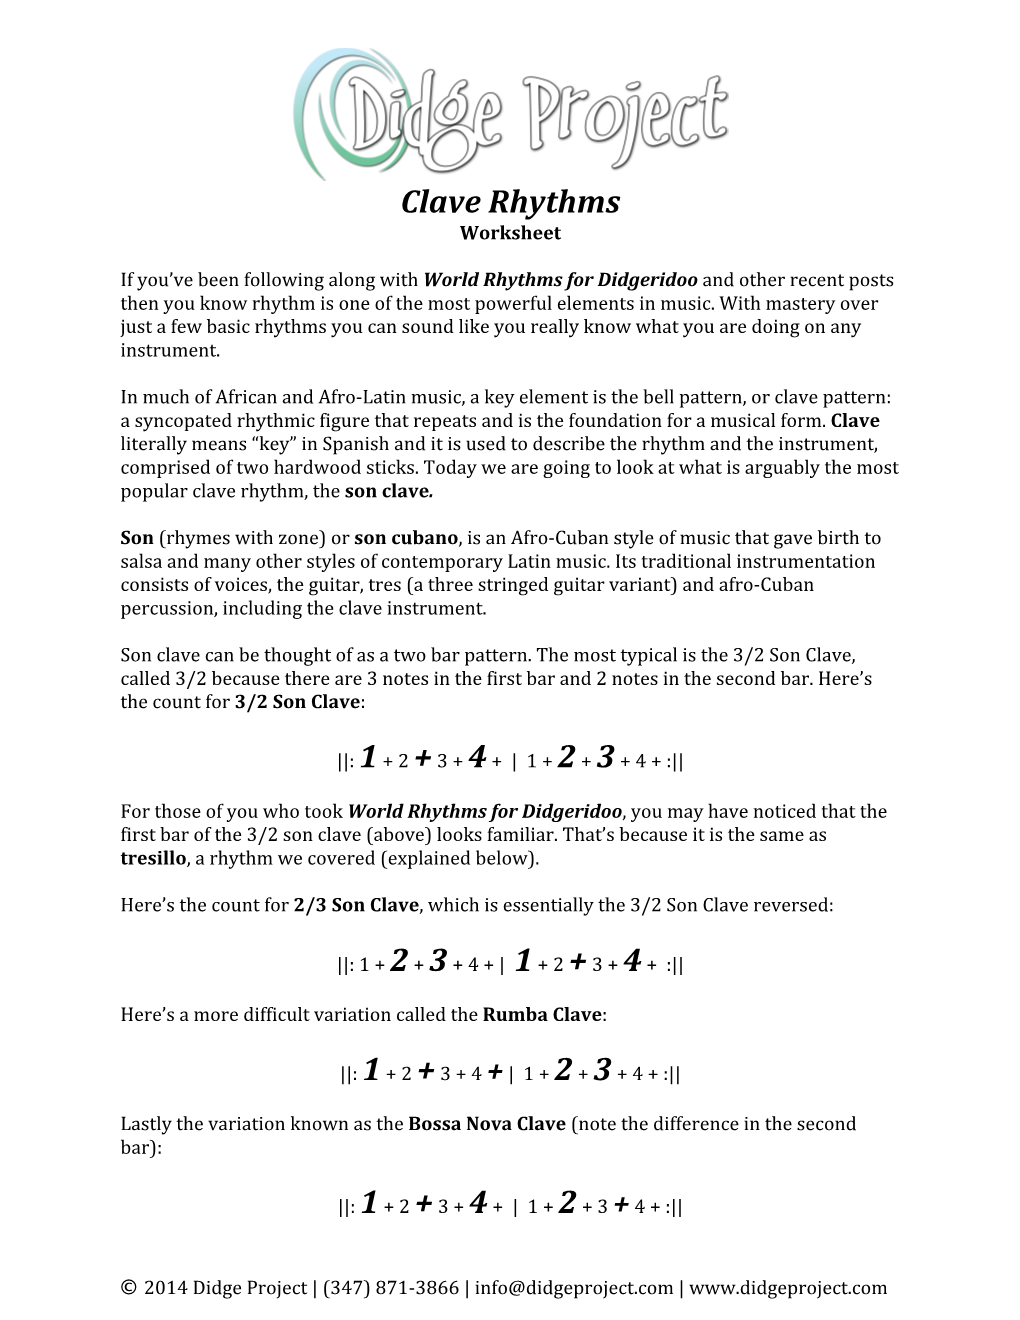 Clave Rhythms for Didgeridoo